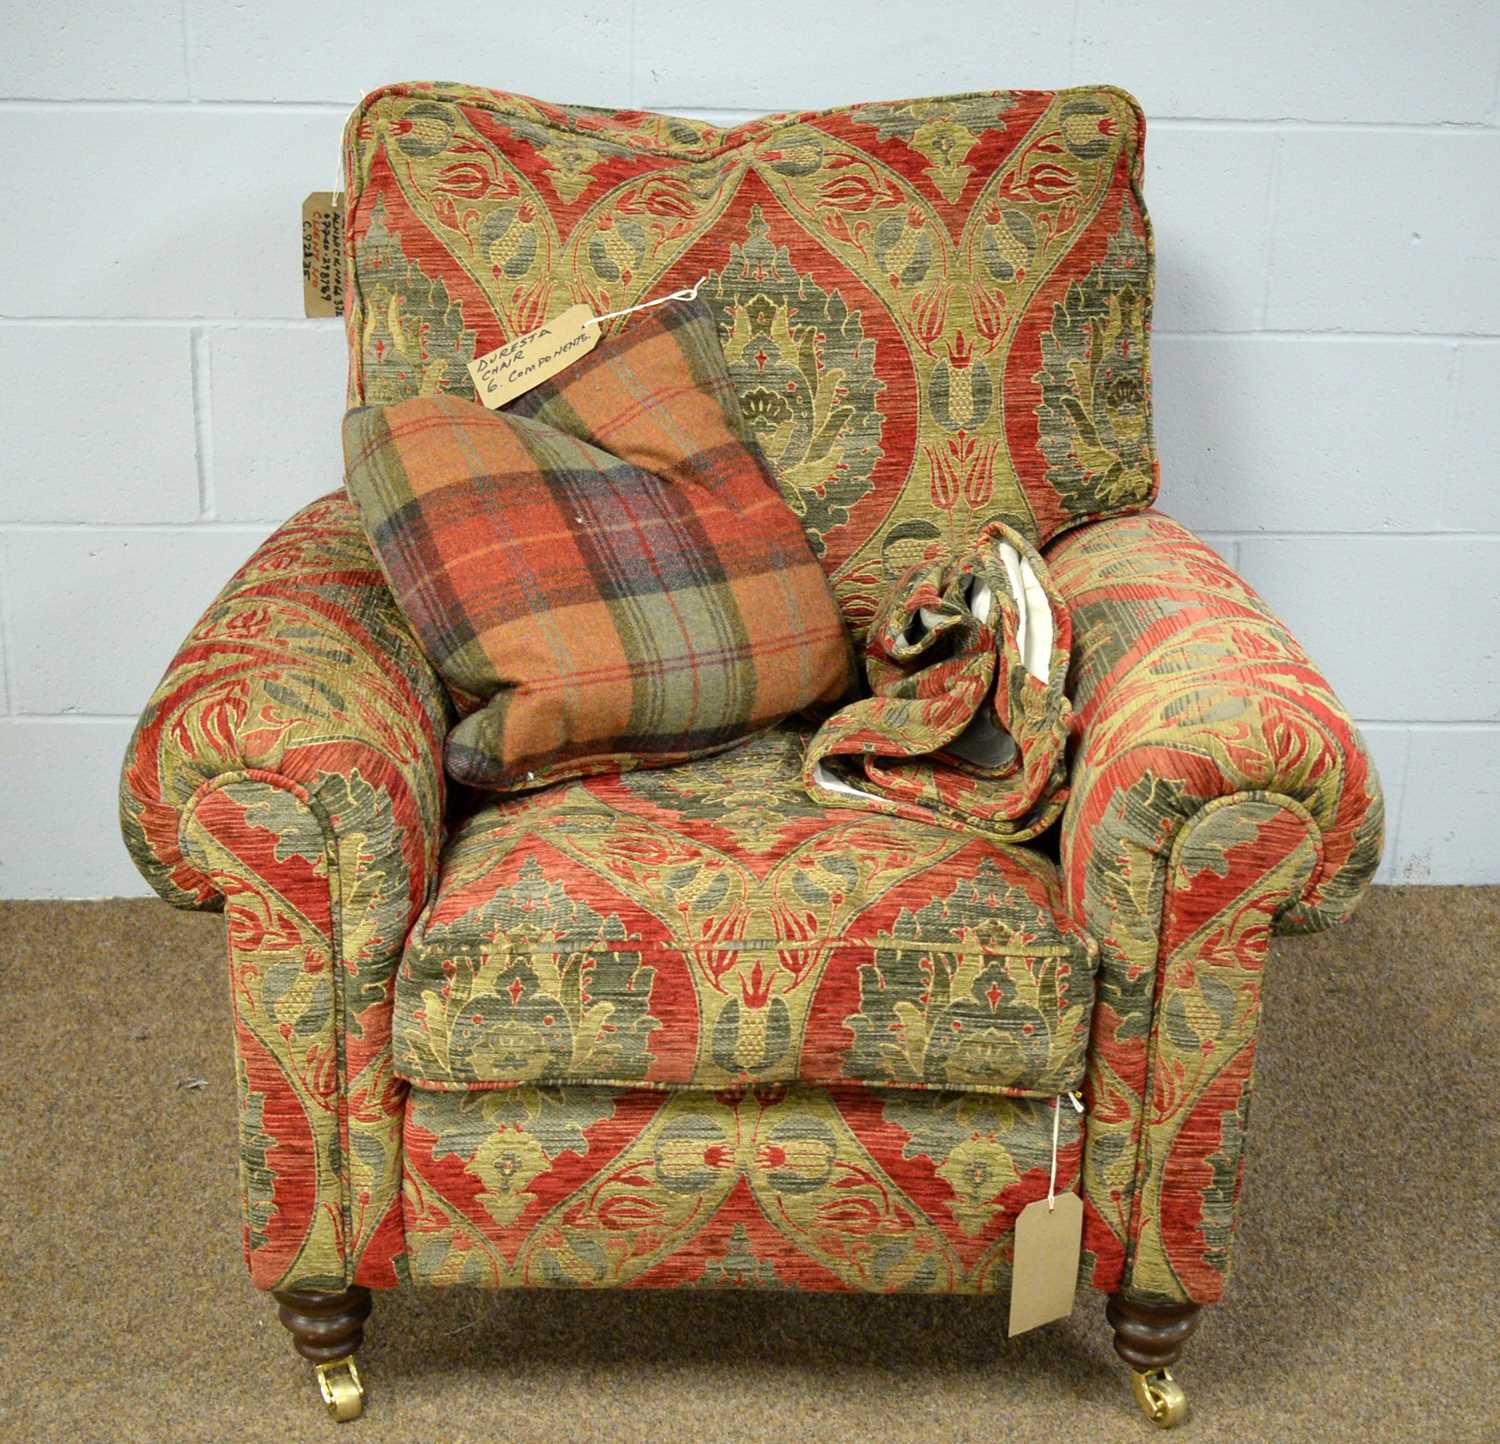 A 20th Century Duresta armchair.